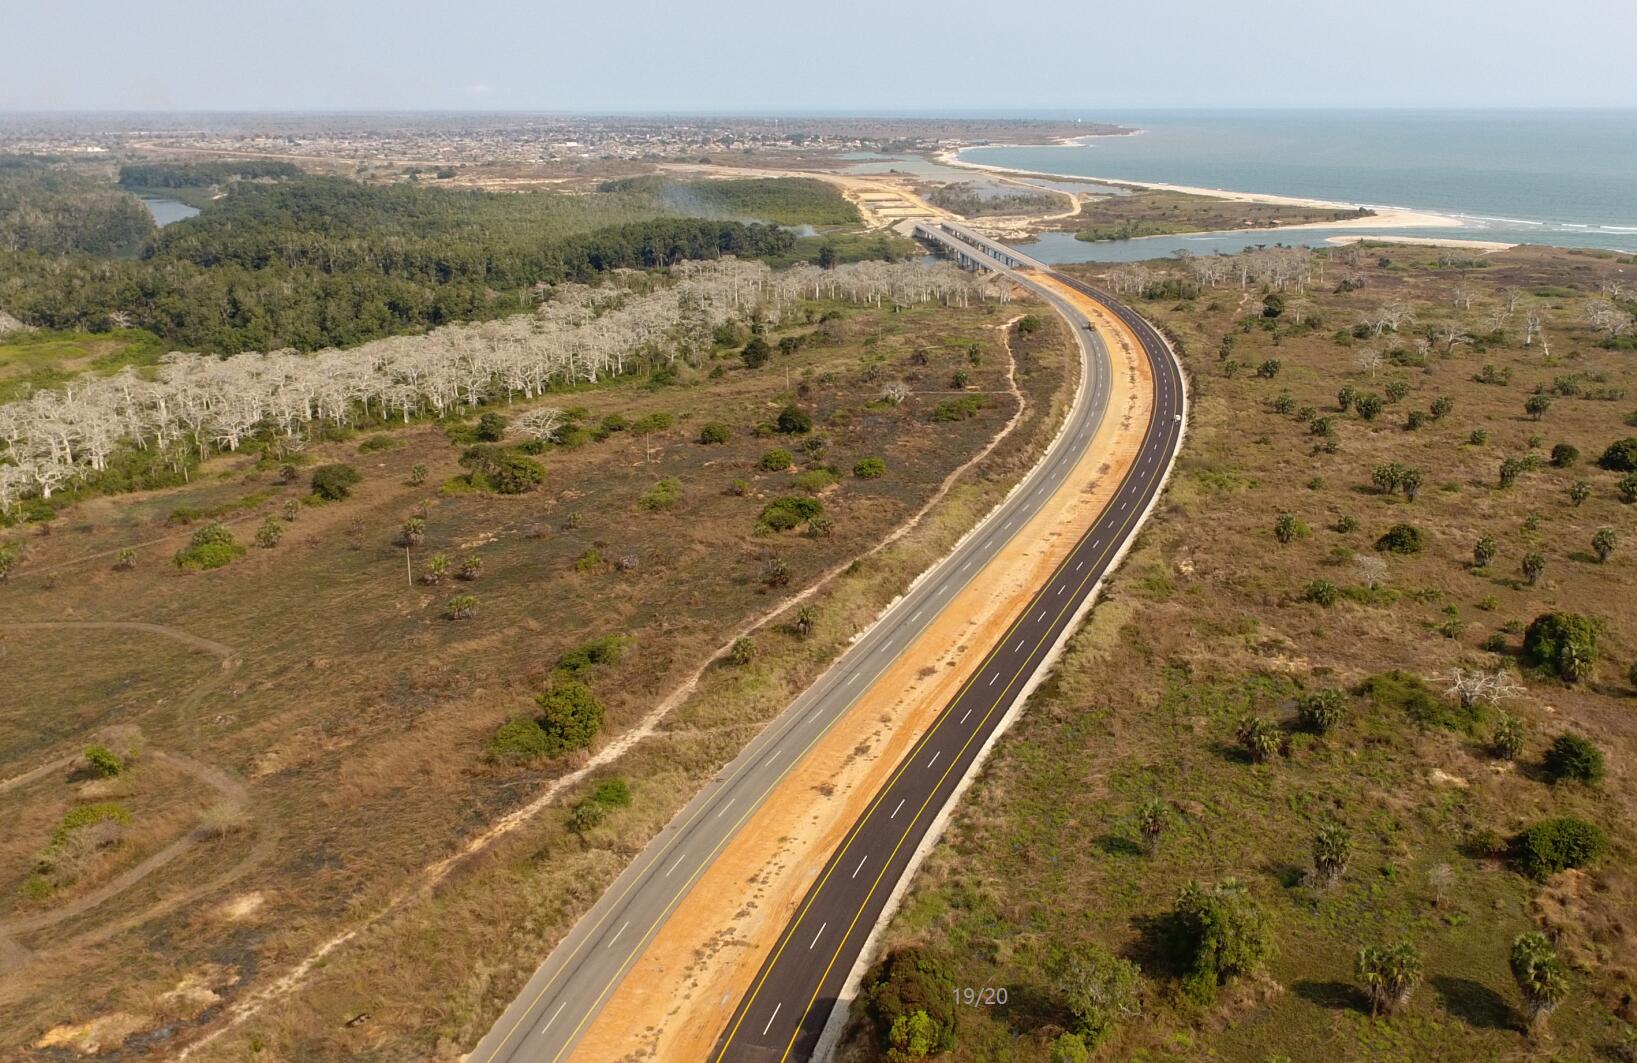 安哥拉恩泽托-索约高速公路Project Auto-estrada Nzeto-Soyo in Angola.jpg